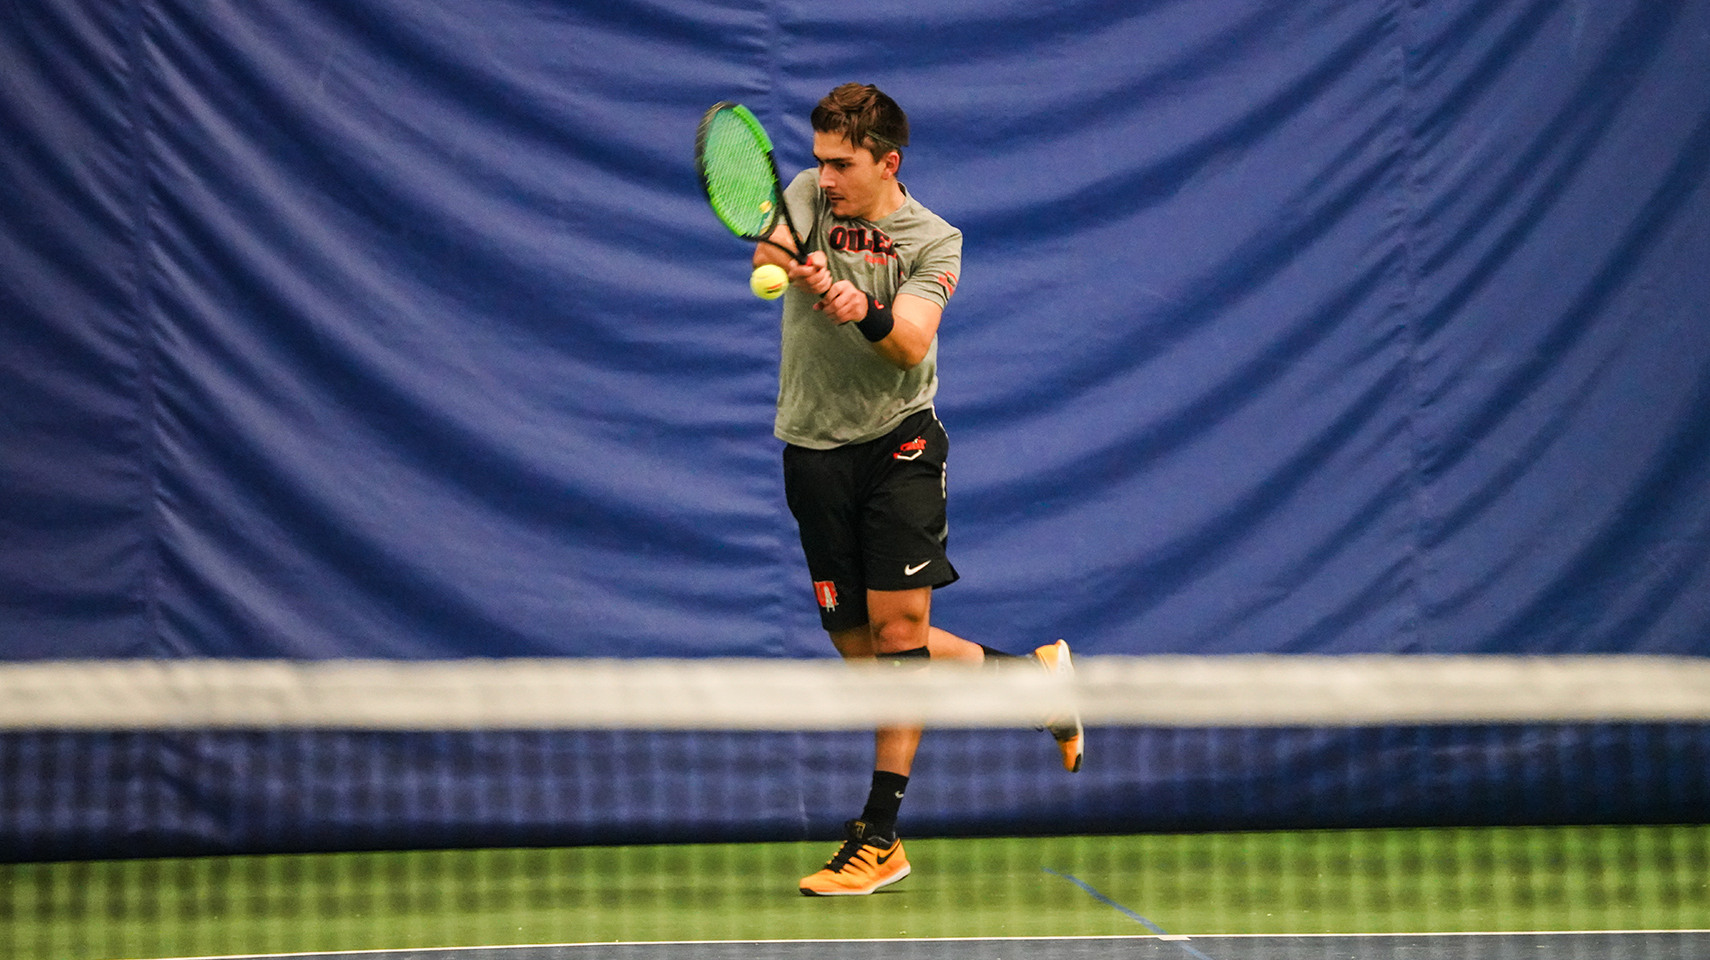 Men's tennis player in grey hitting a tennis ball indoors